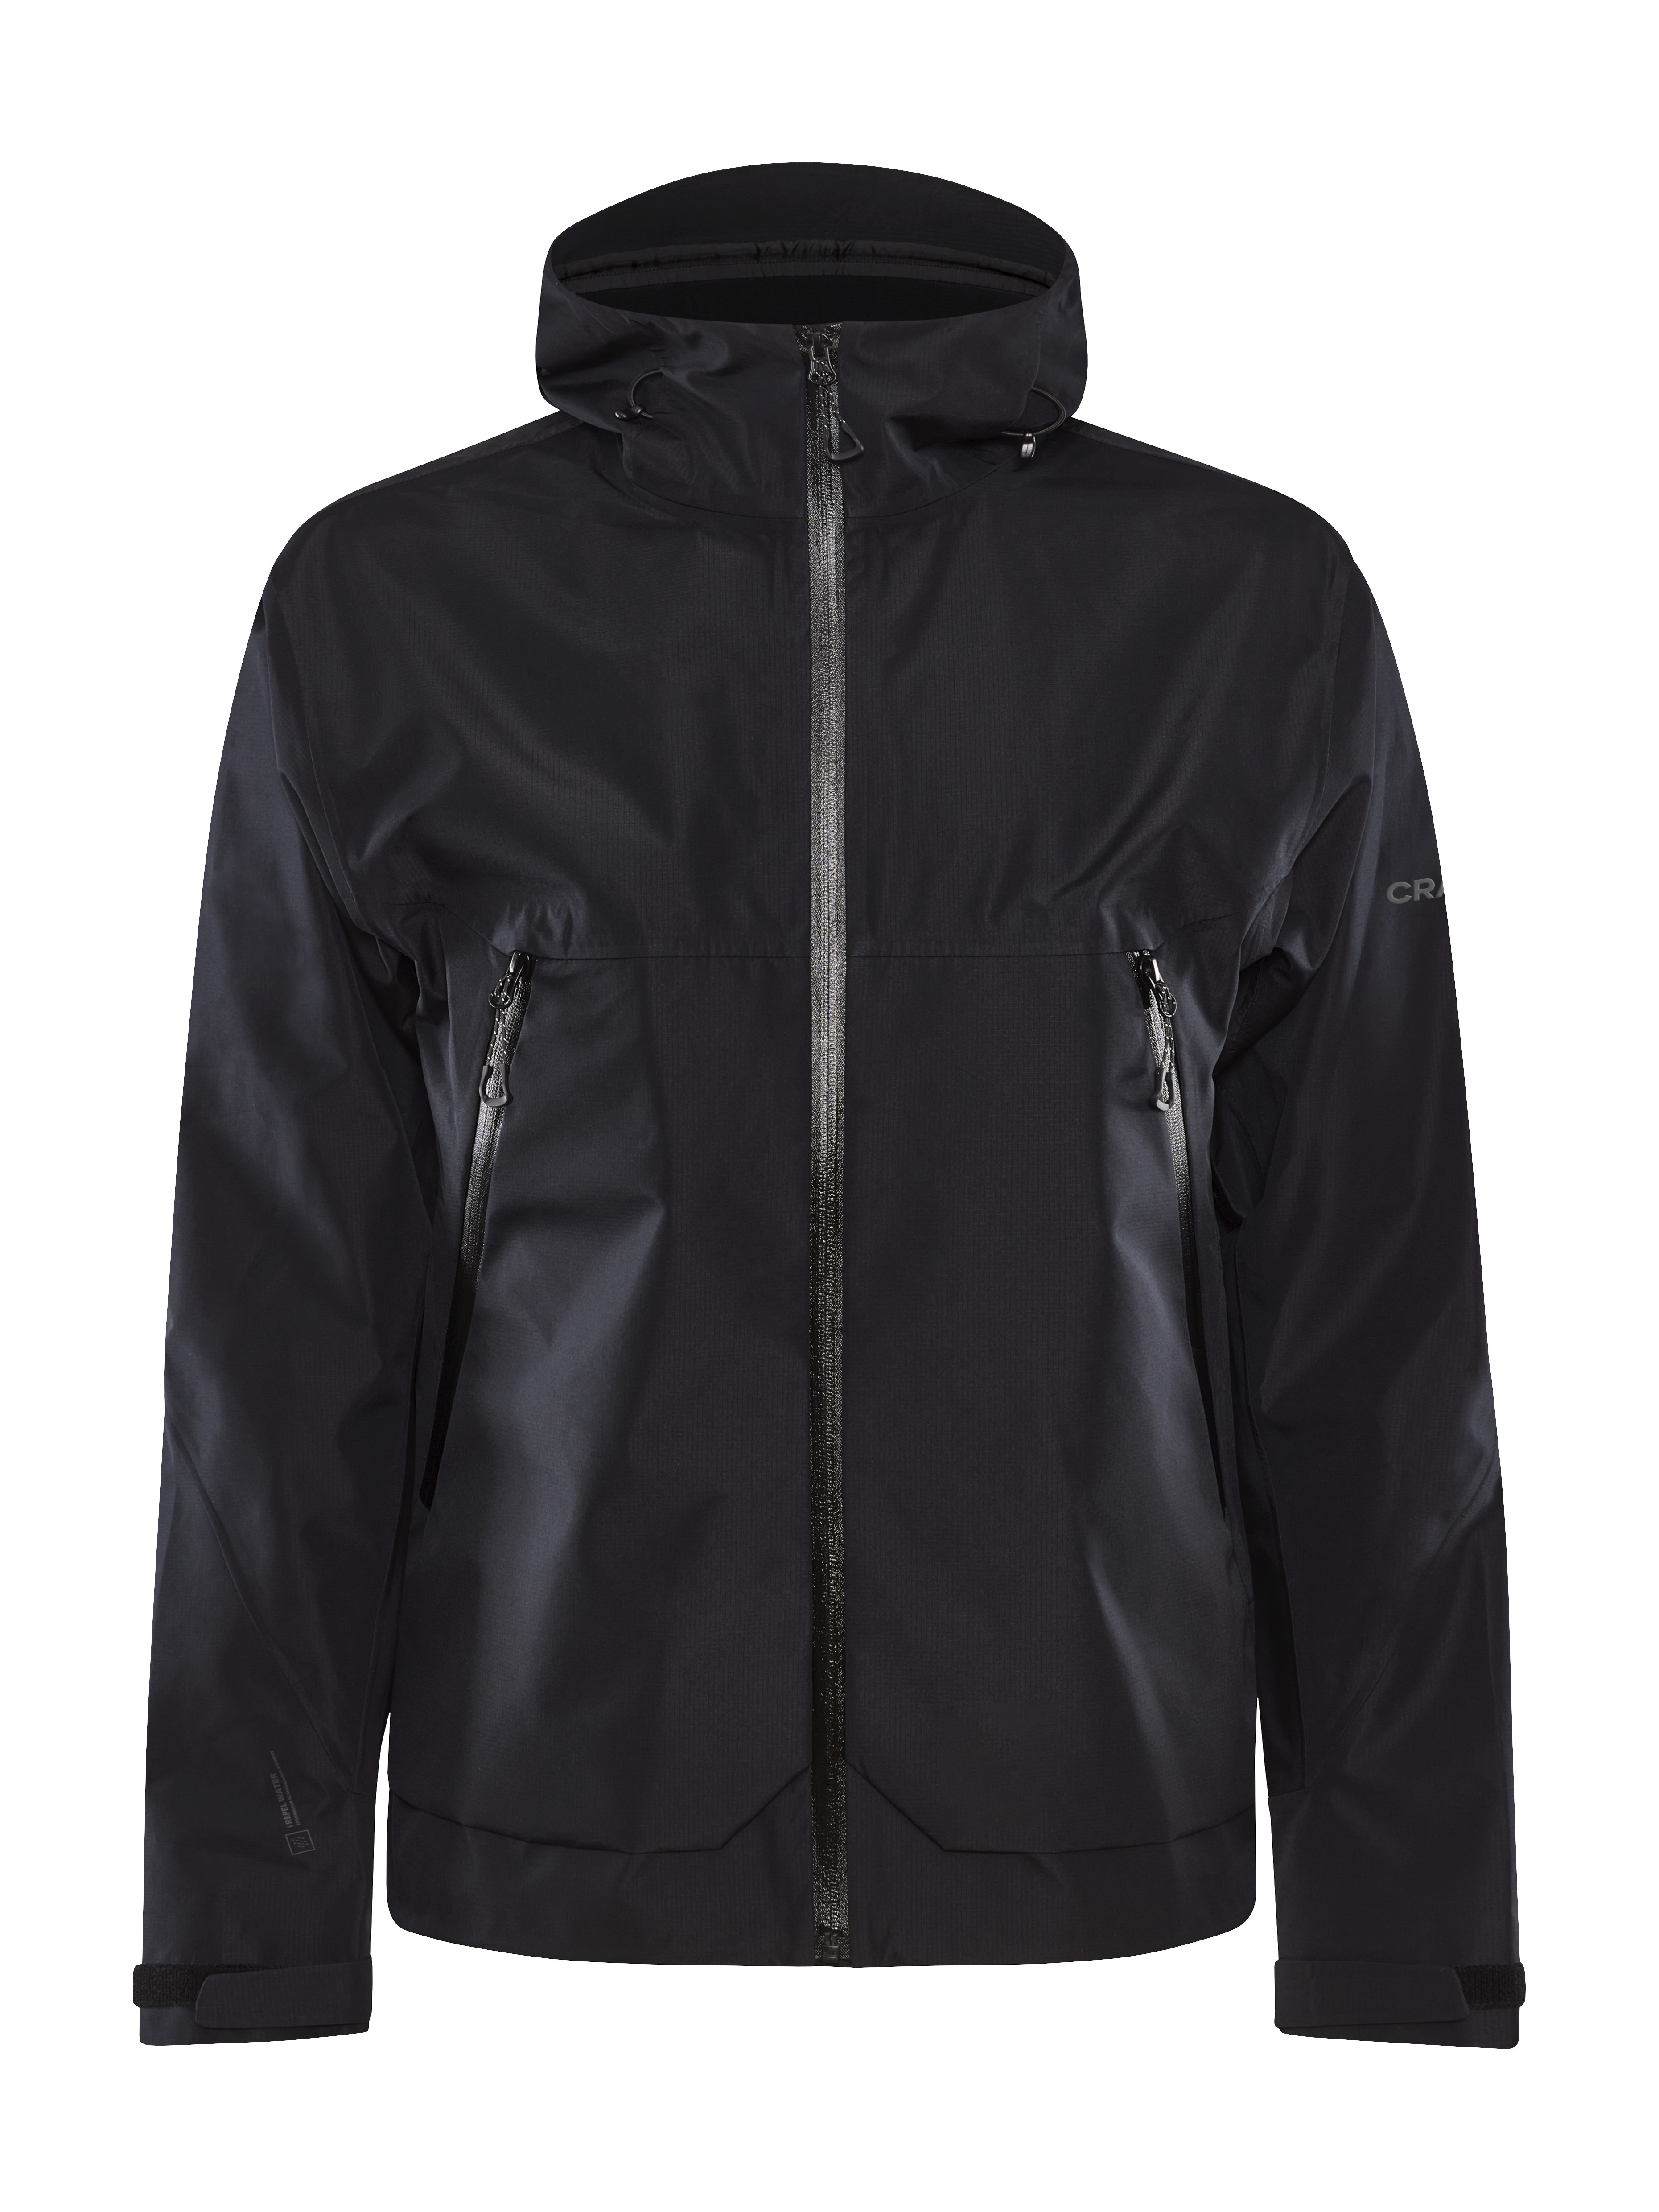 ADV Explore Shell Jacket M - Black | Craft Sportswear